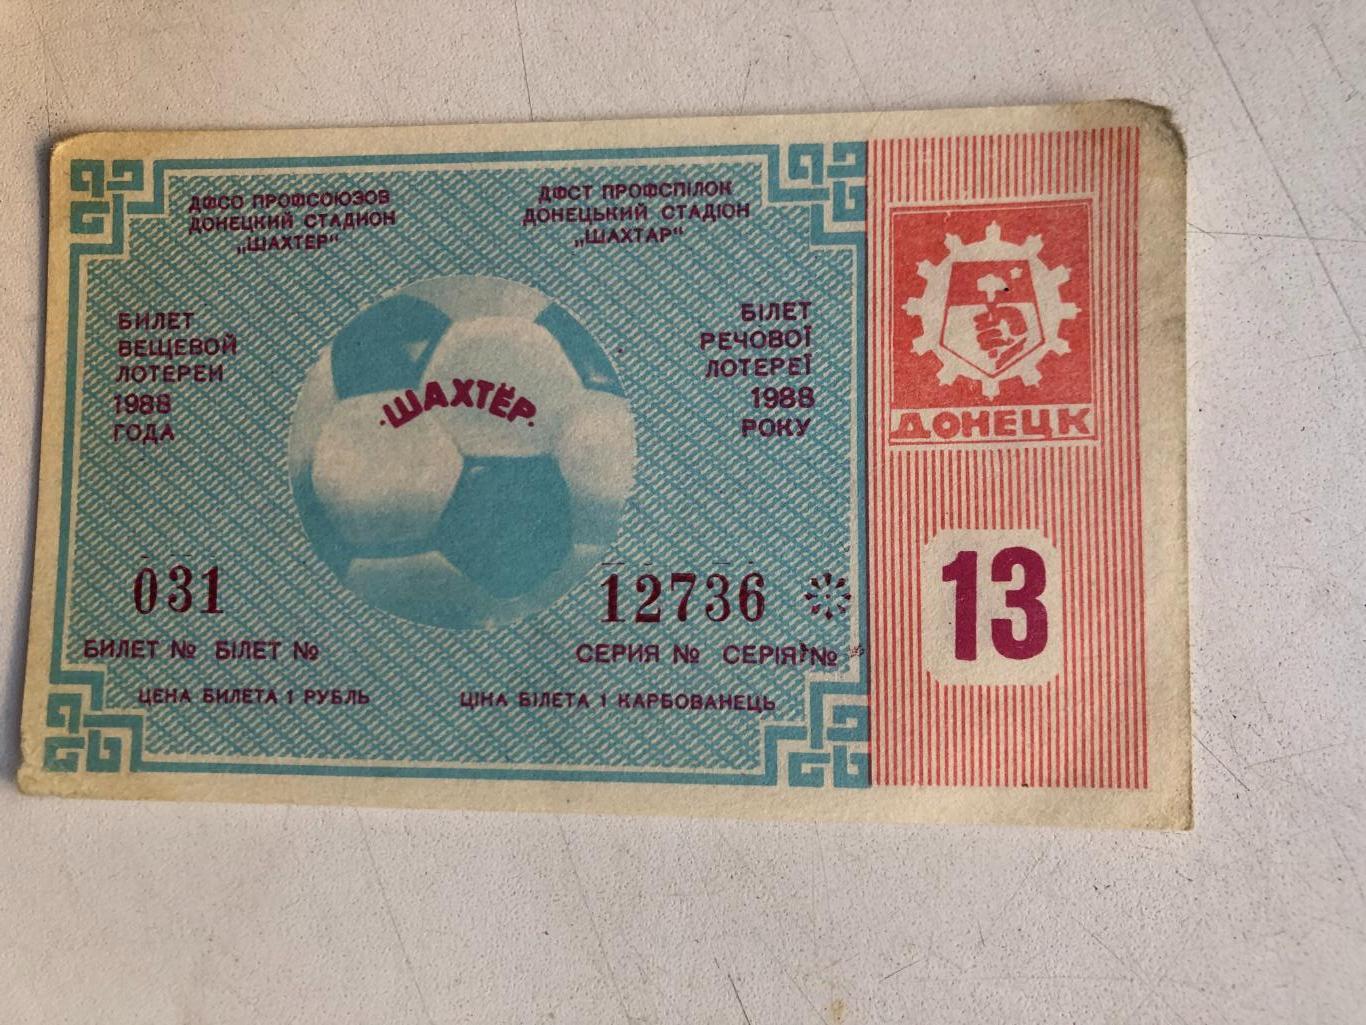 Шахтер Донецк Билет вещевой лотереи 1988 года